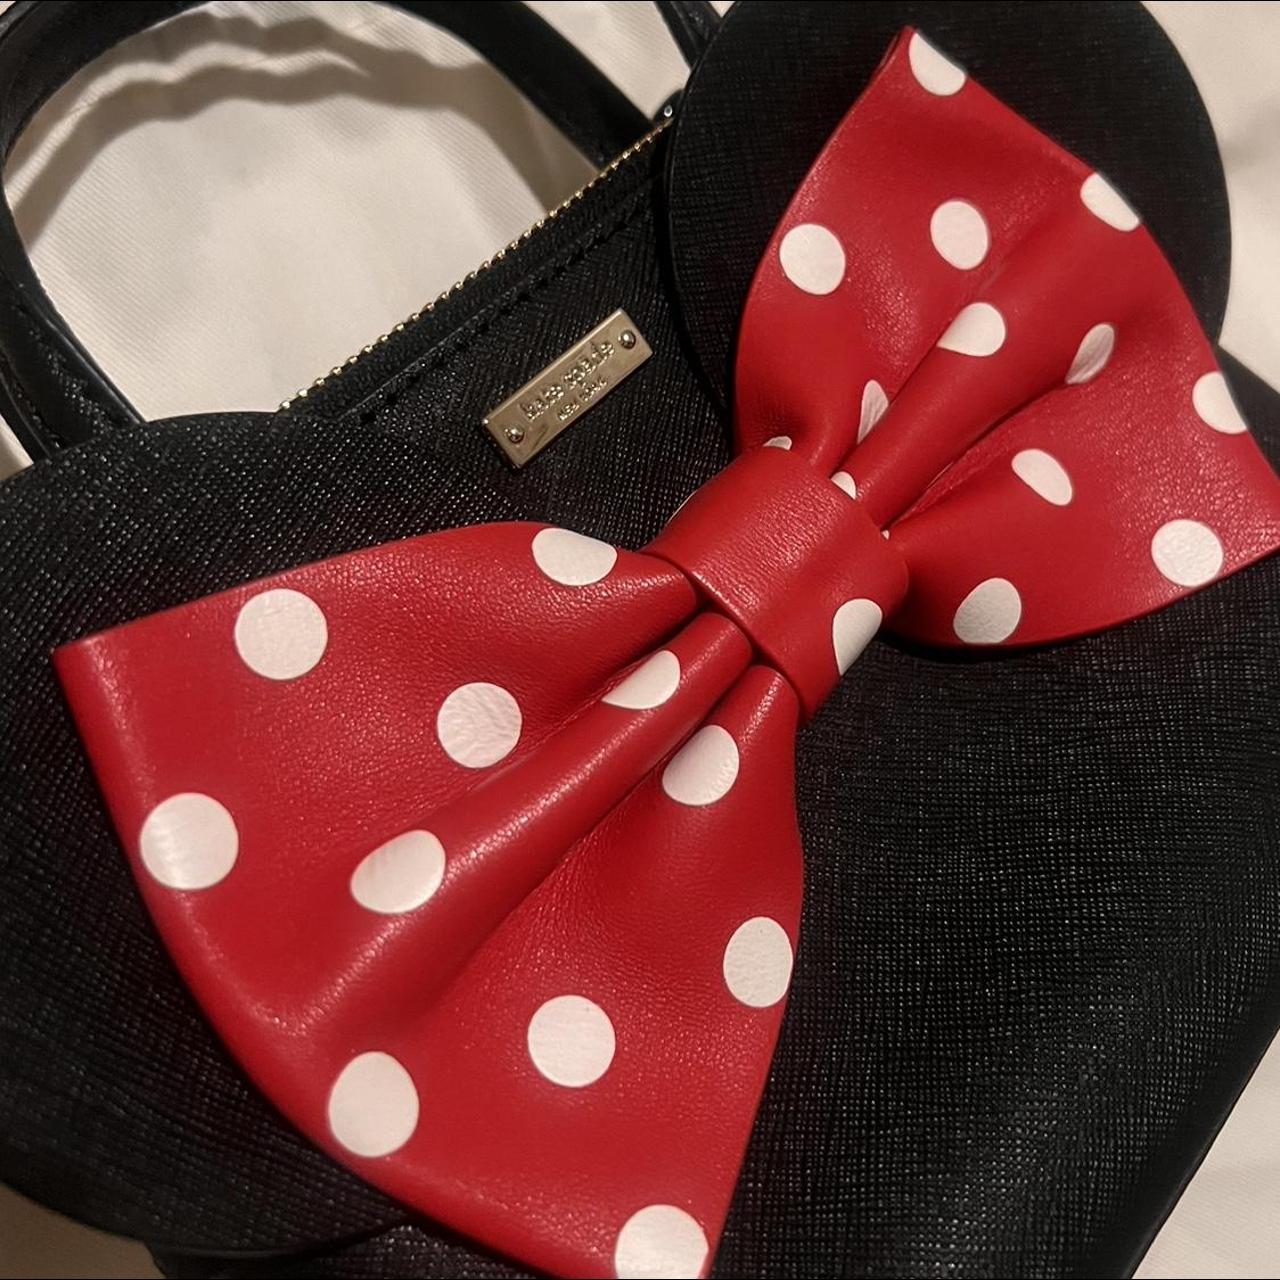 Disney X Kate Spade New York Minnie Mouse Crossbody Bag | Kate Spade Outlet